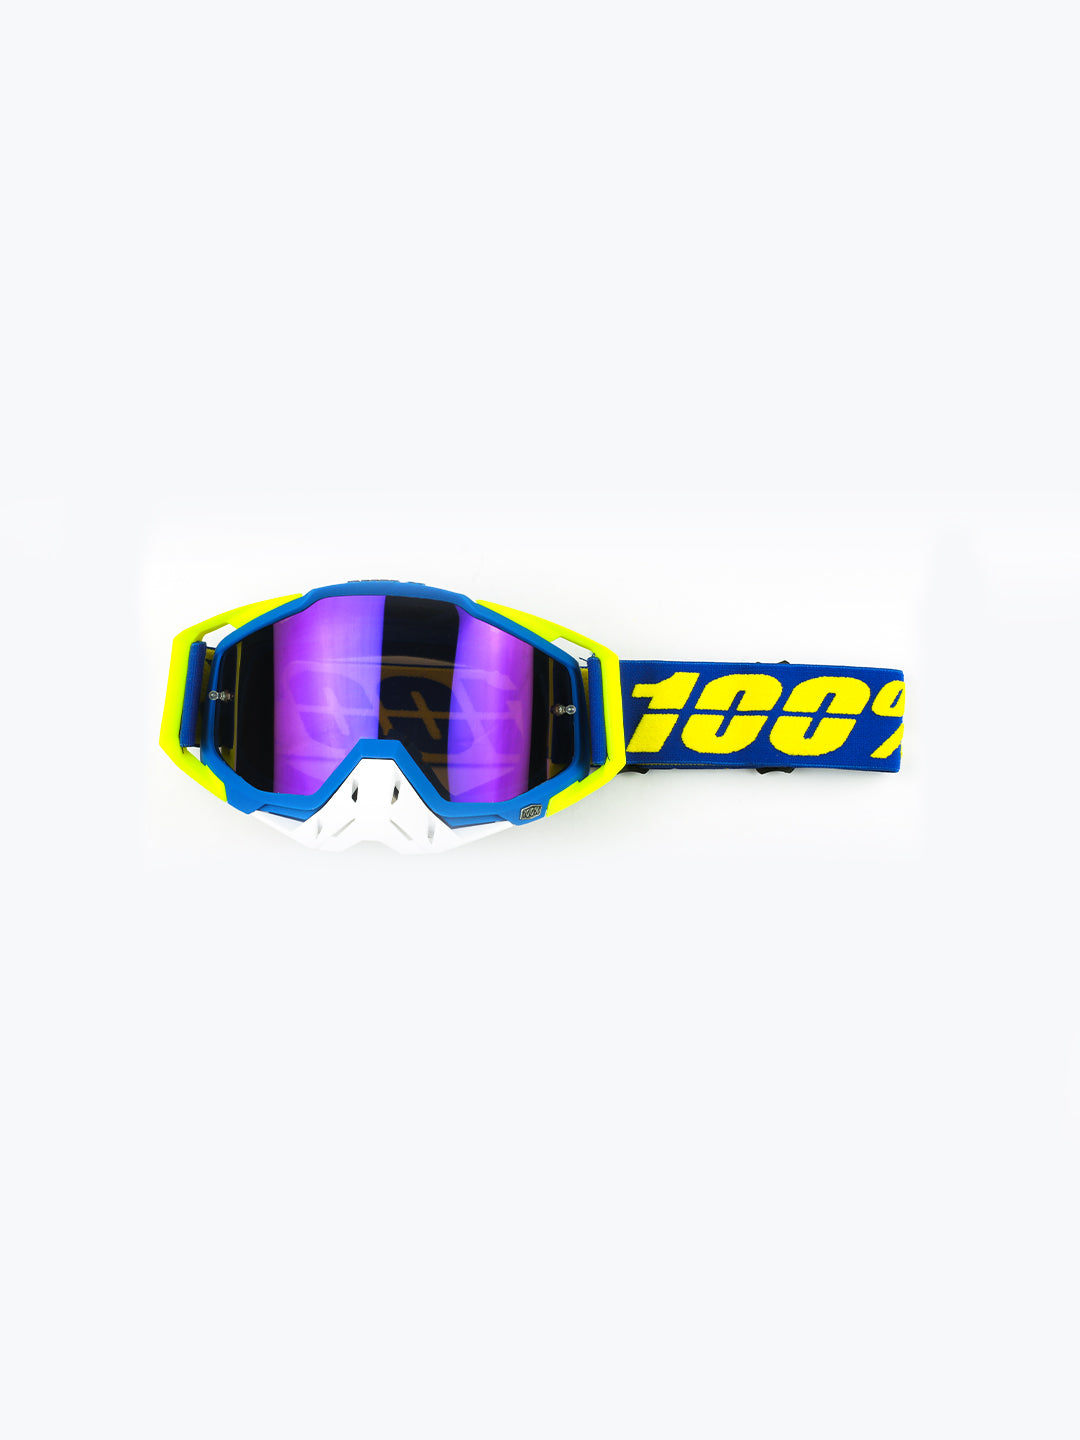 100% Goggles Yellow White Blue Tint